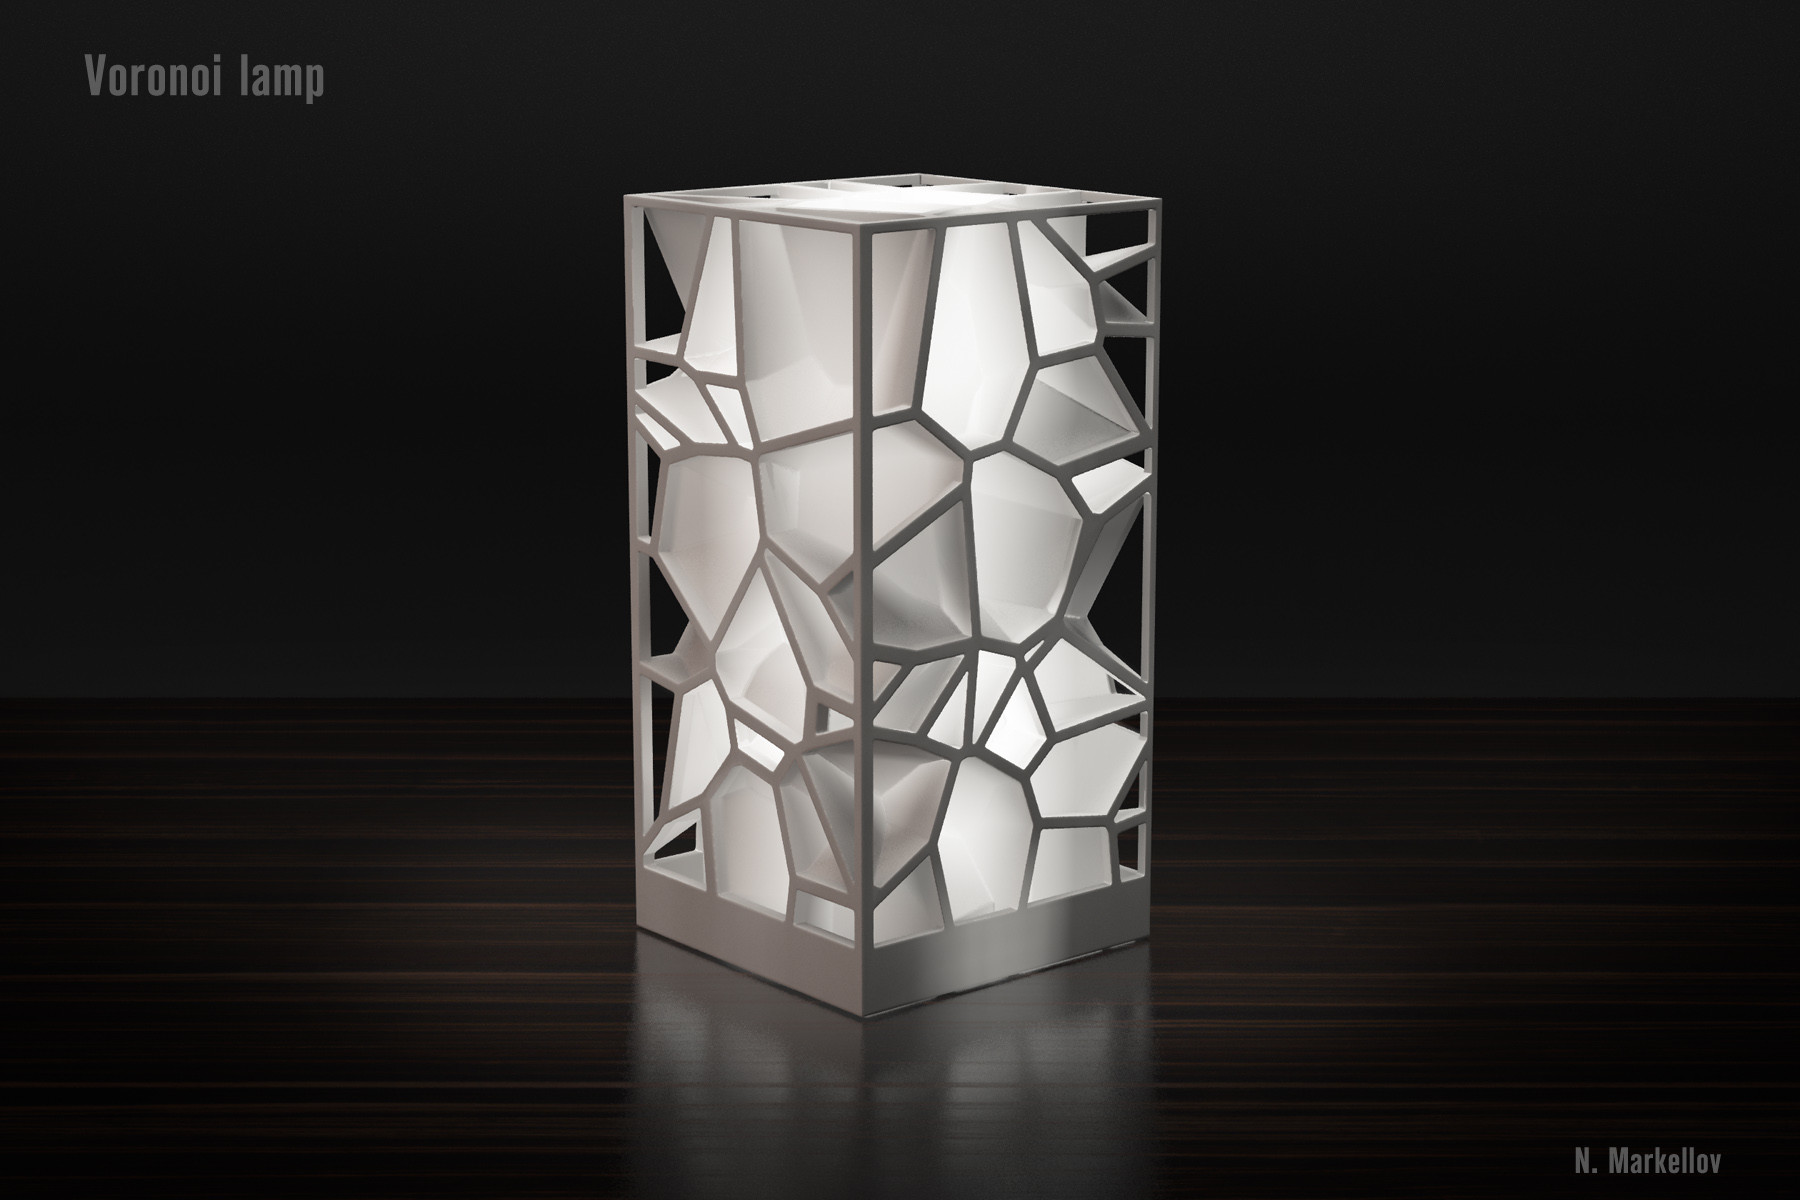 17 Perfect Glass Column Vase 2024 free download glass column vase of voronoi lamp by markellov thingiverse regarding by markellov dec 9 2014 view original